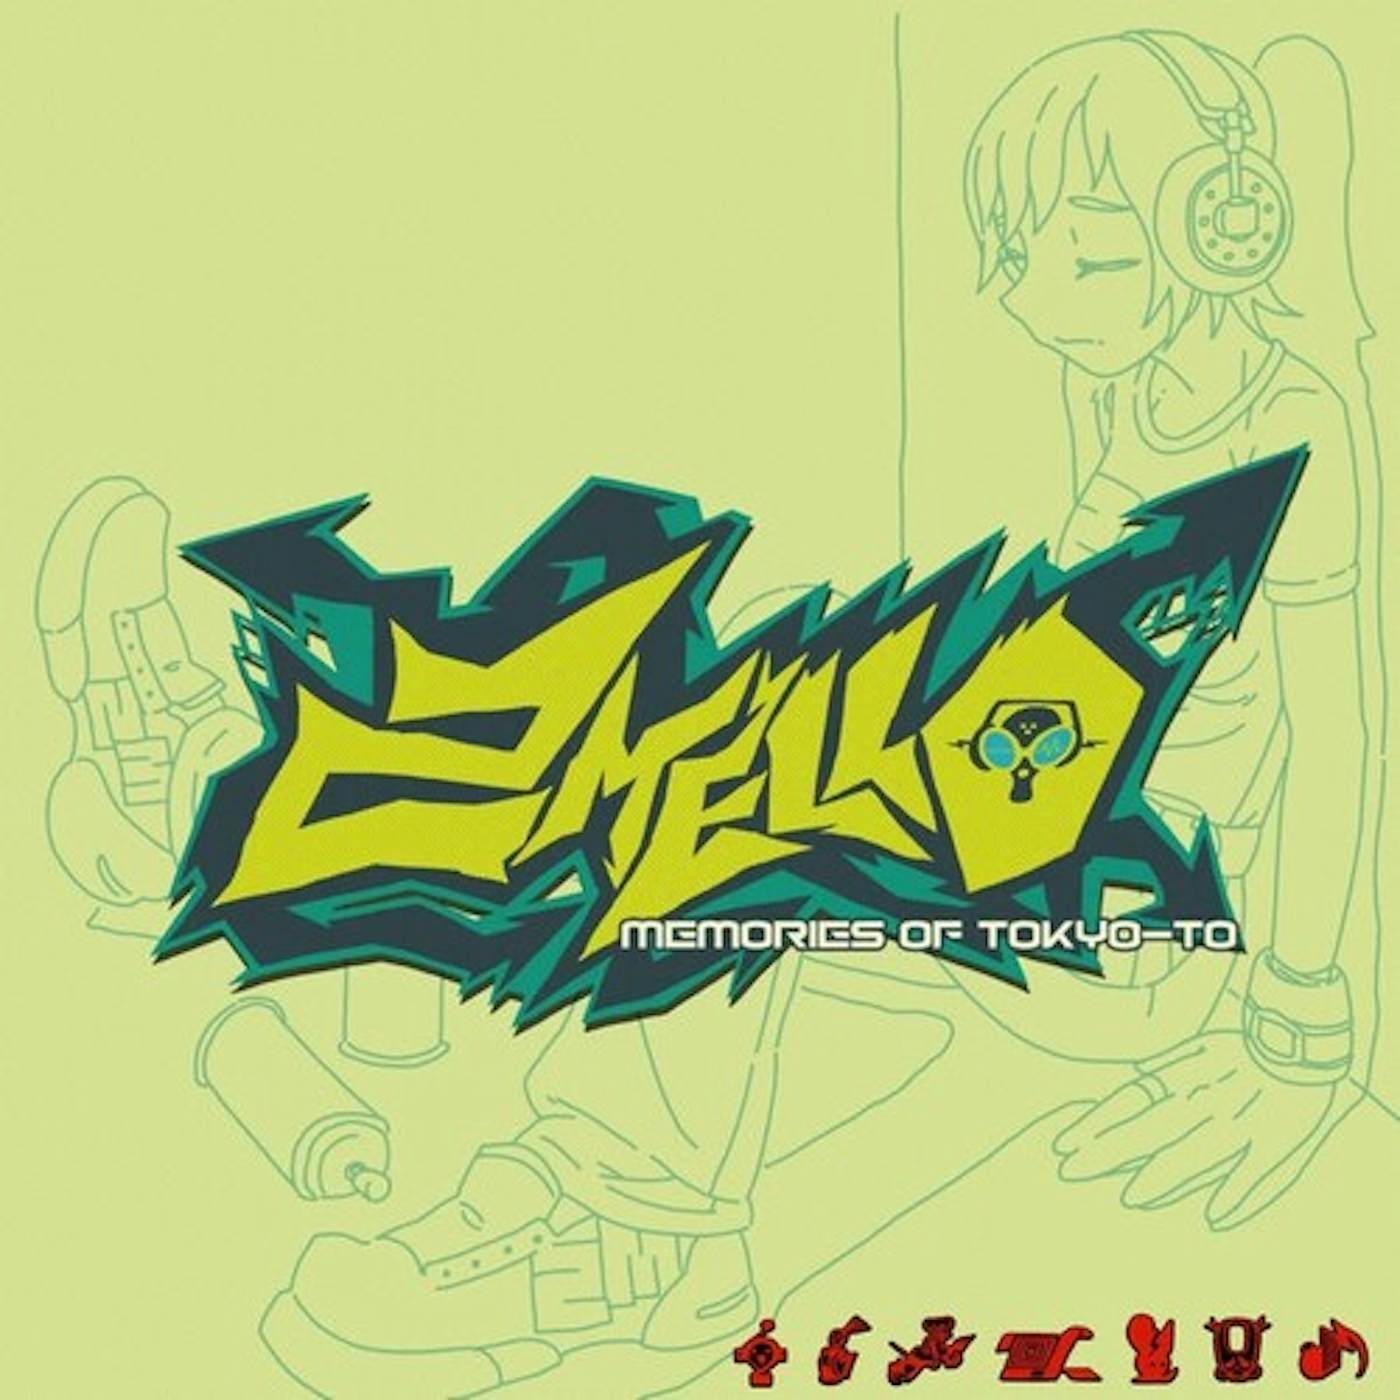 2 Mello MEMORIES OF TOKYO-TO - Original Soundtrack Vinyl Record